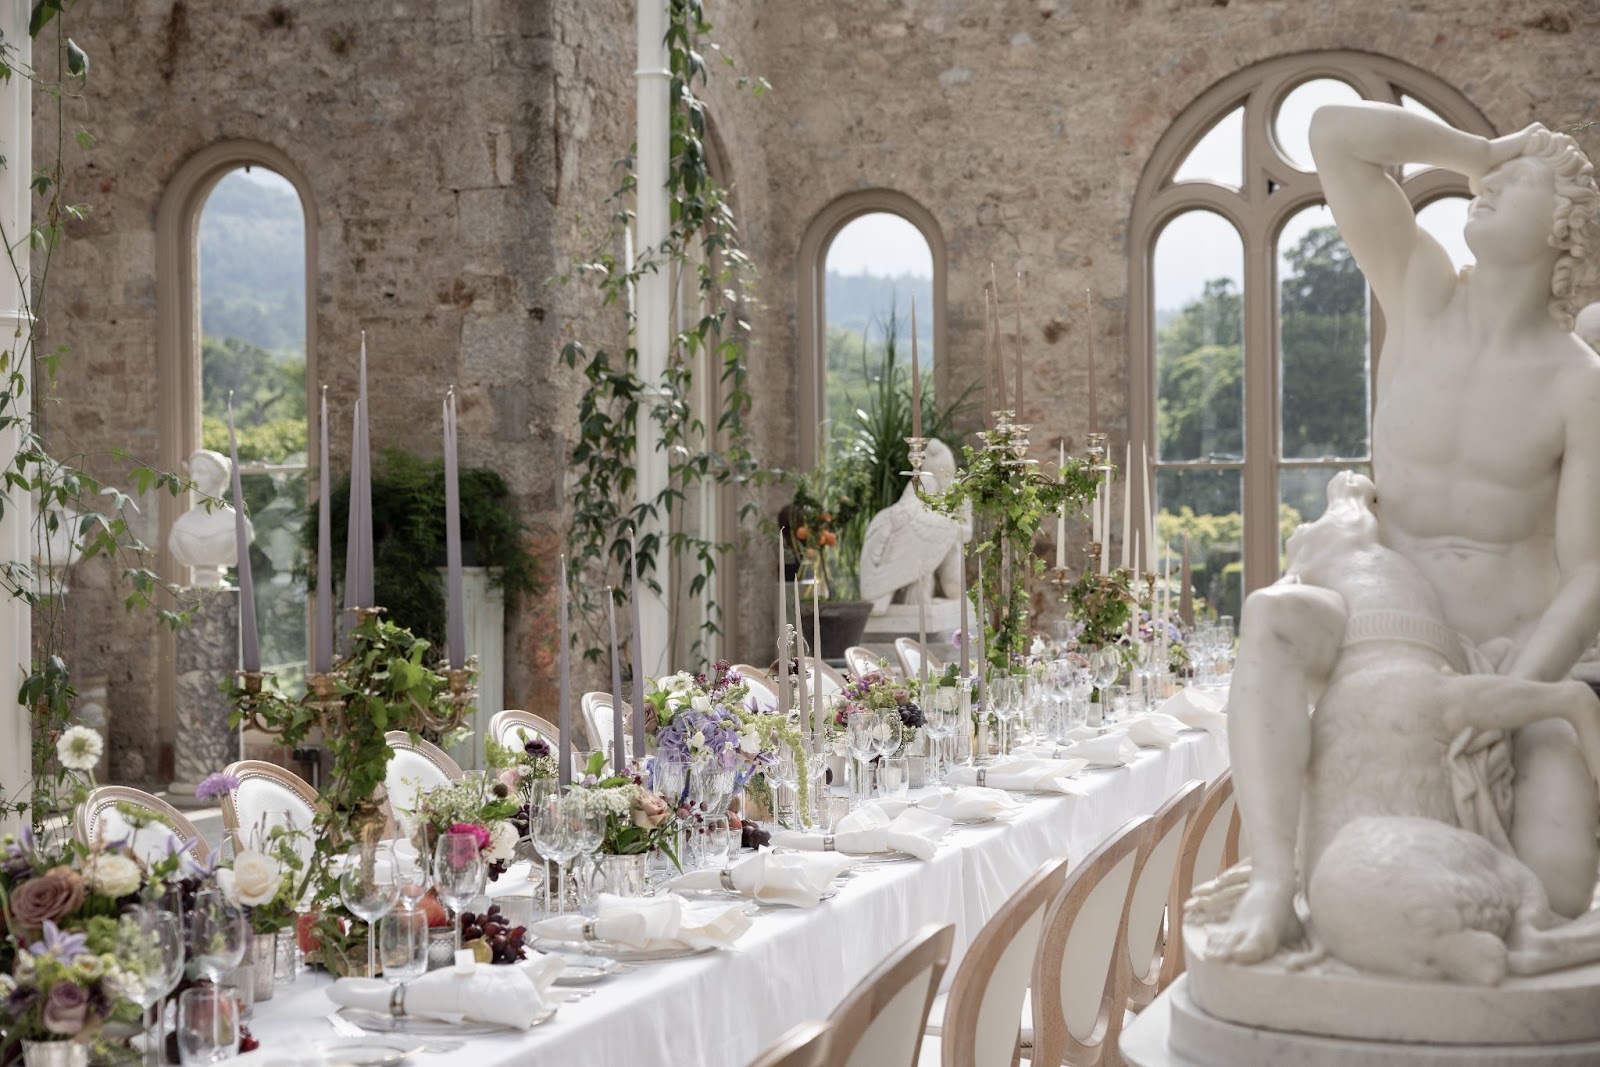 Seasonal botanicals and stunning statues fill the wedding reception by Tara Fay.